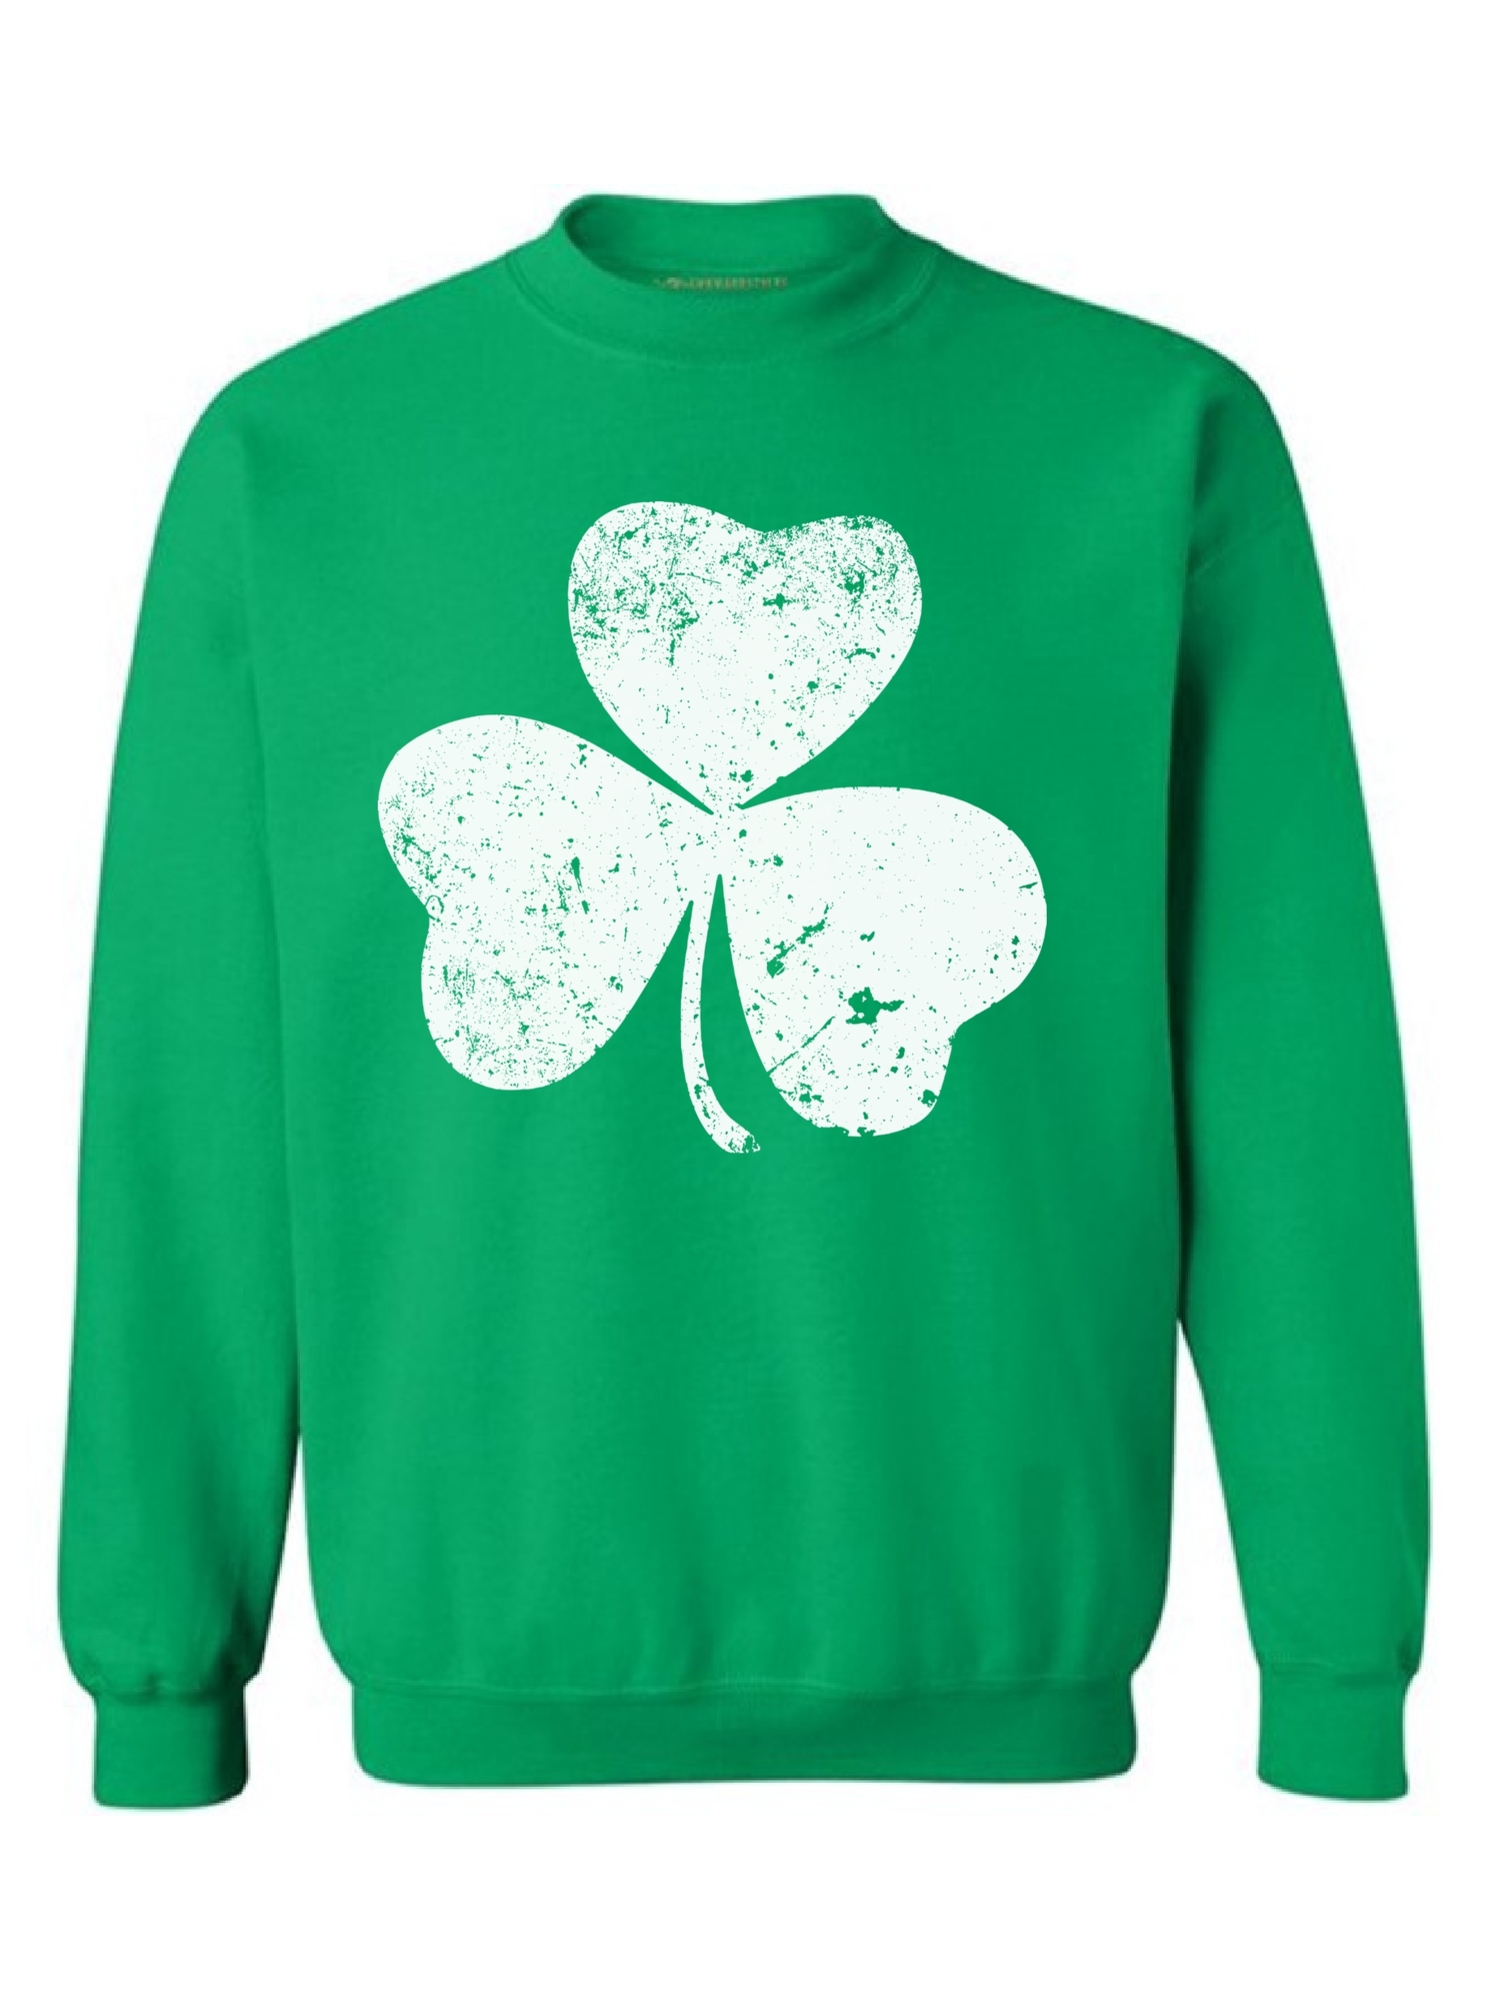 Awkward Styles St. Patrick's Day Sweatshirt Irish Clover Sweater Lucky Sweater for St. Patricks Irish Gifts Irish Shamrock Sweater Lucky Shamrock Sweatshirt Irish Pride St. Patricks Irish Sweater - image 1 of 5